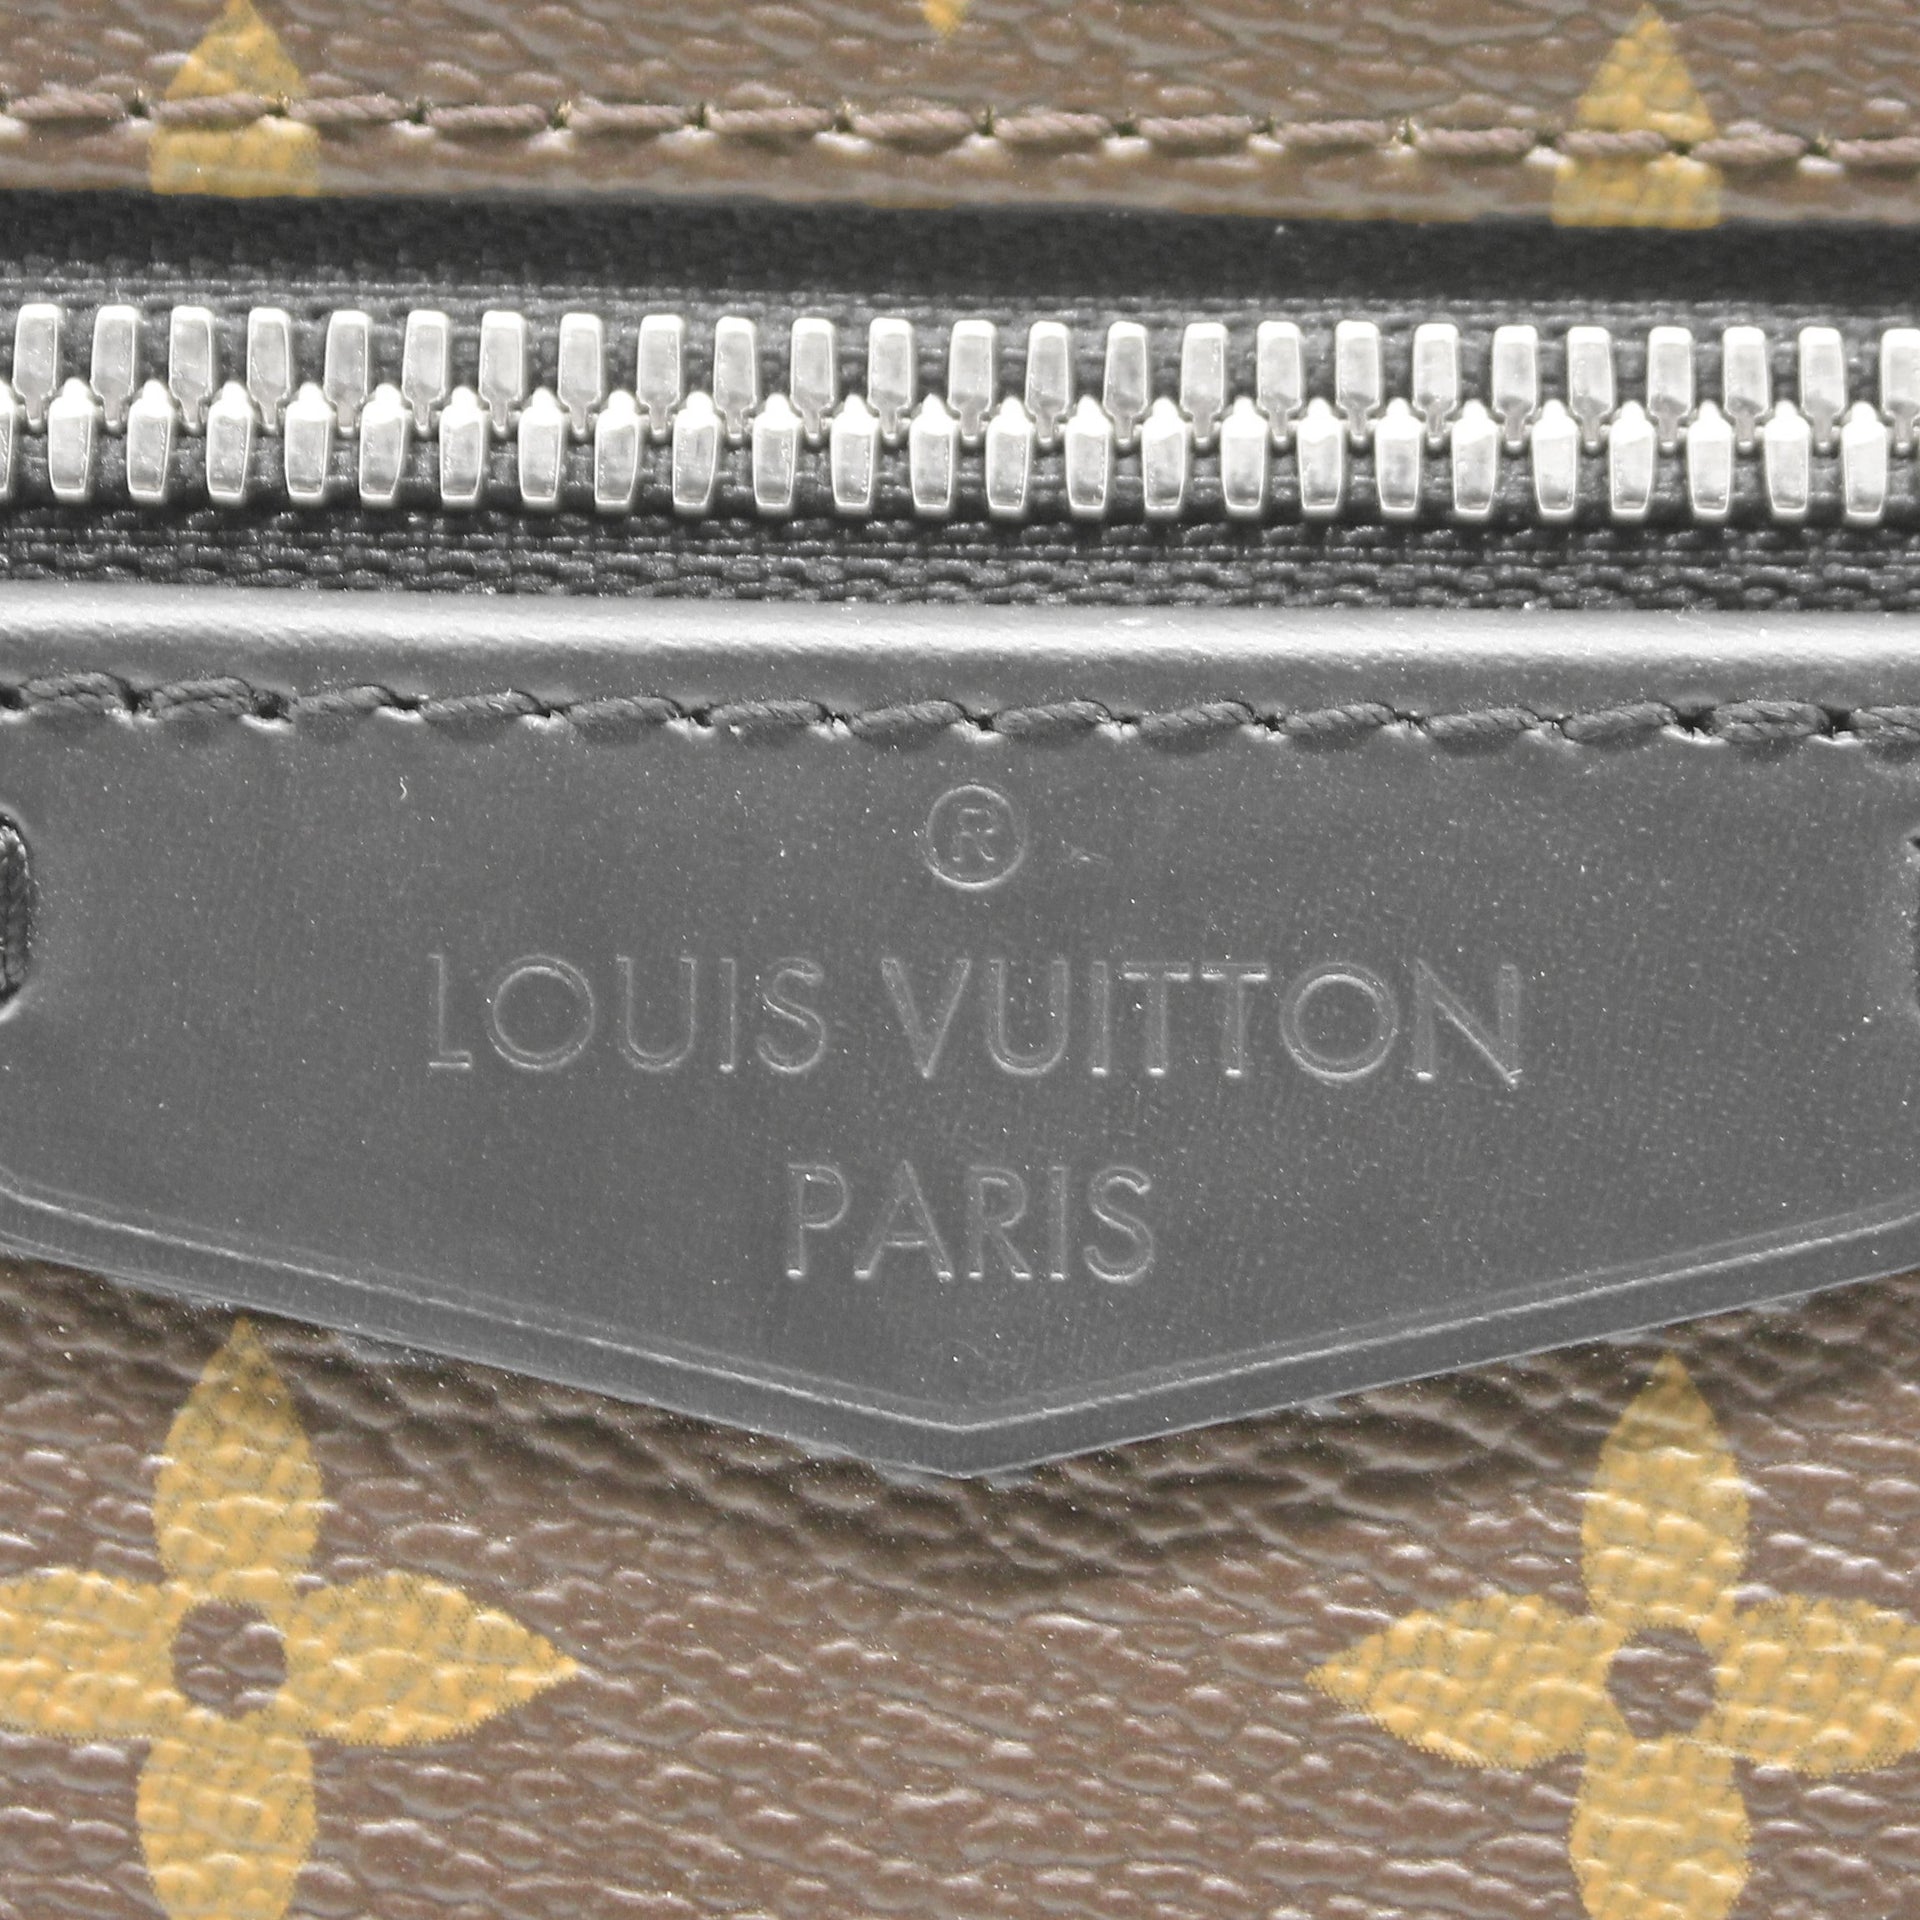 Louis Vuitton Josh Monogram Brown Coated Canvas Backpack